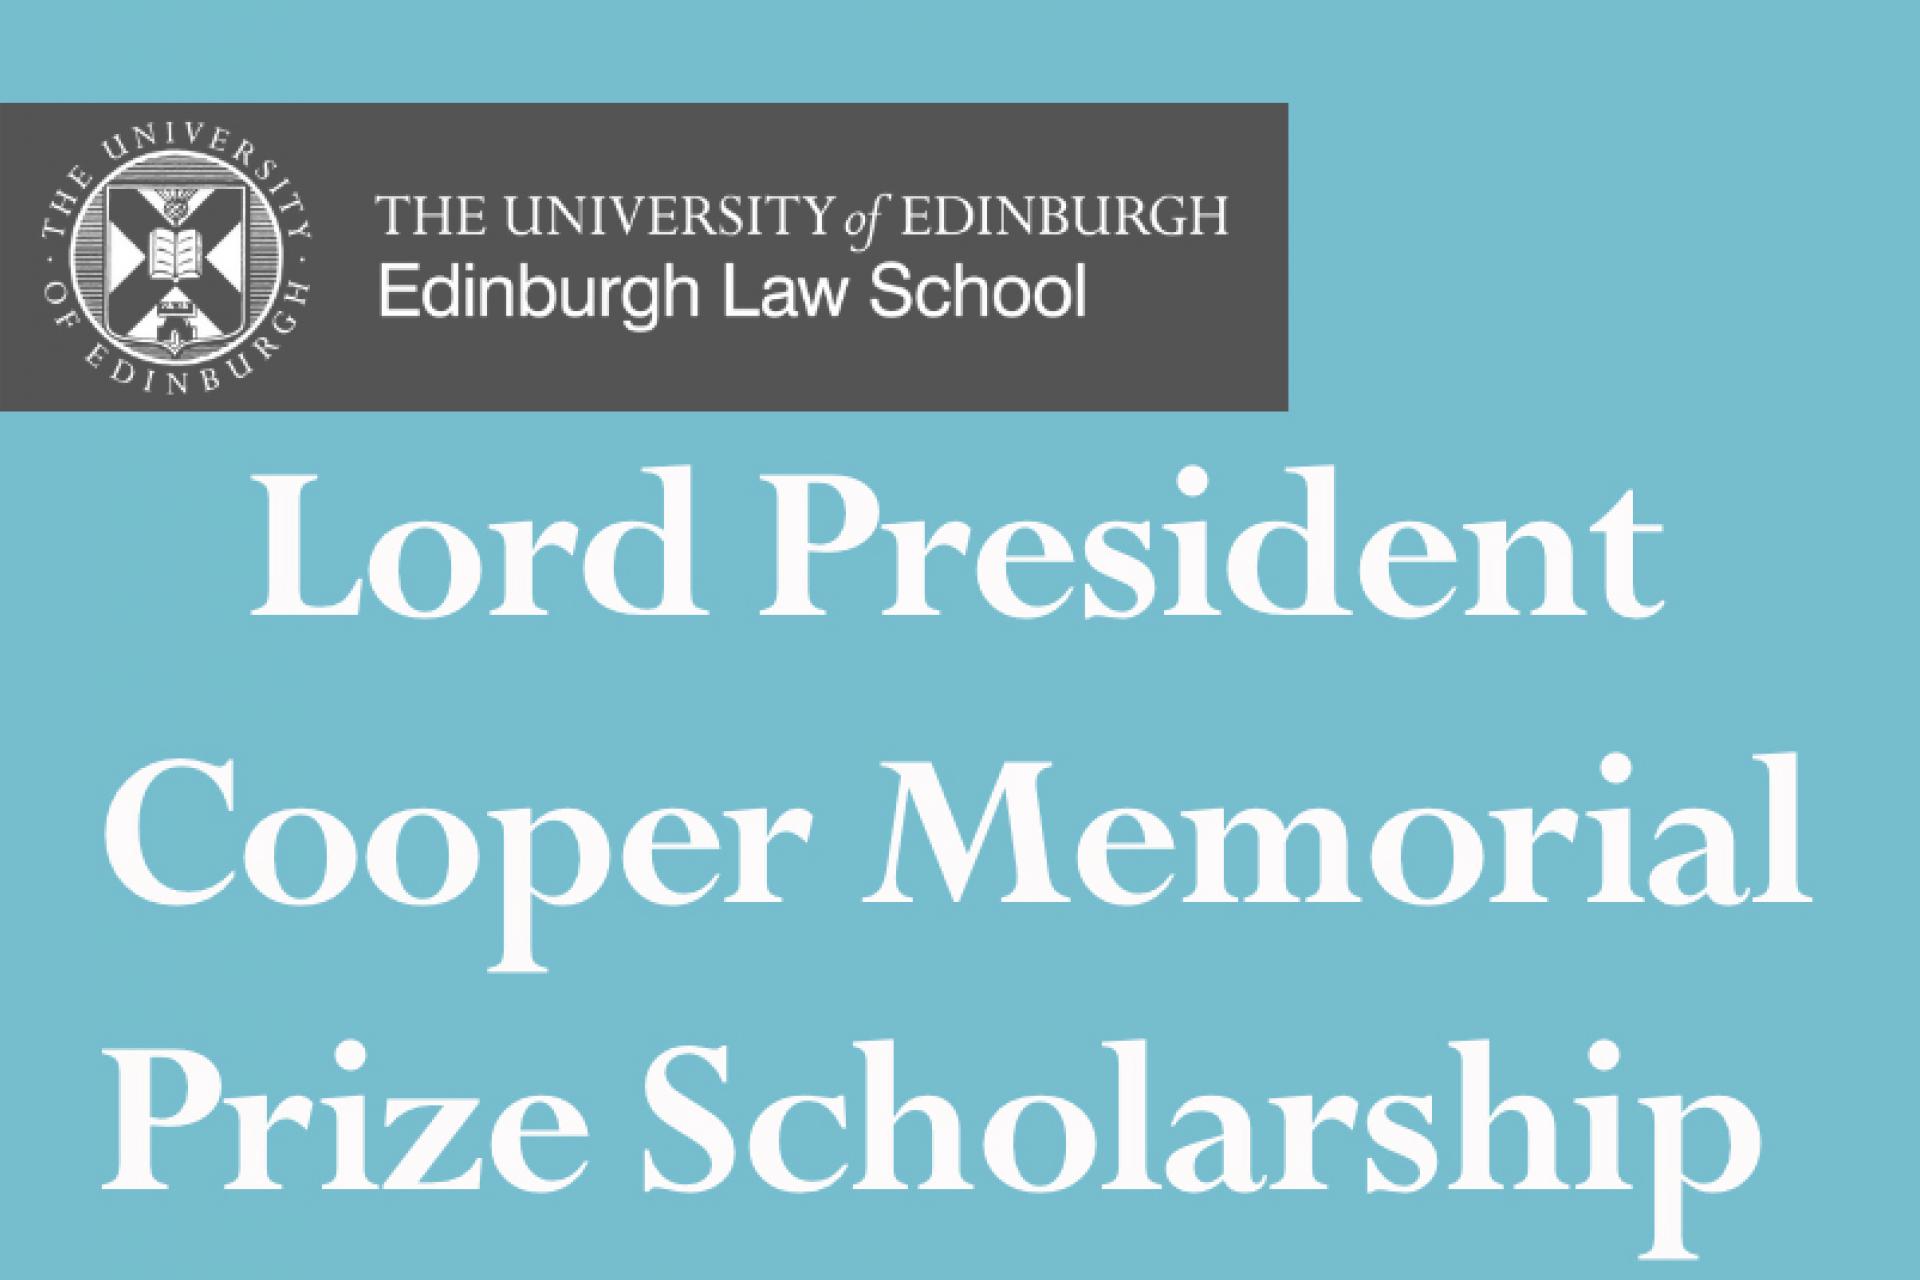 Lord President Cooper Memorial Prize Scholarship